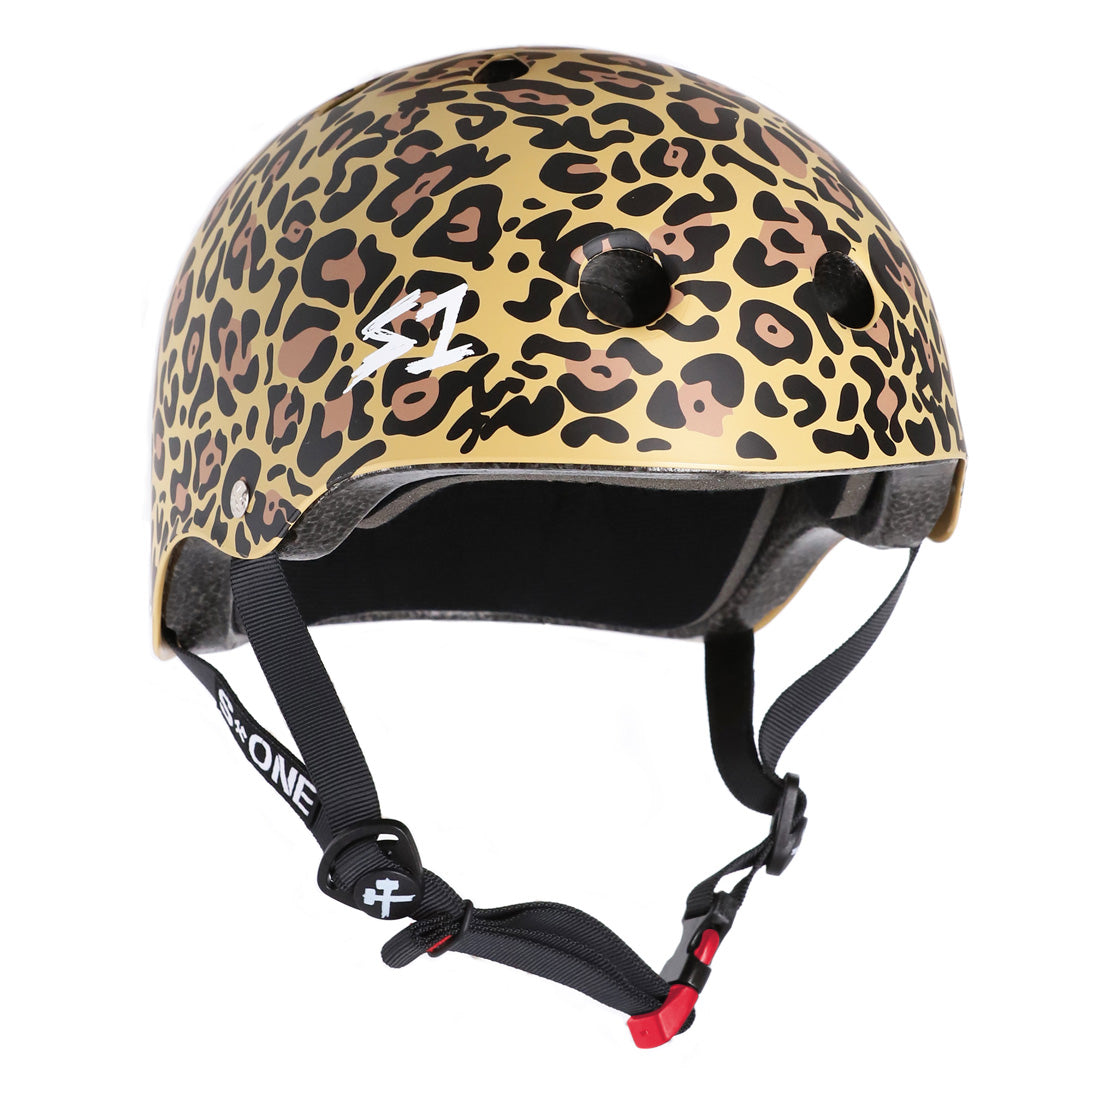 S-One Mini Lifer Helmet - Leopard Matte Helmets